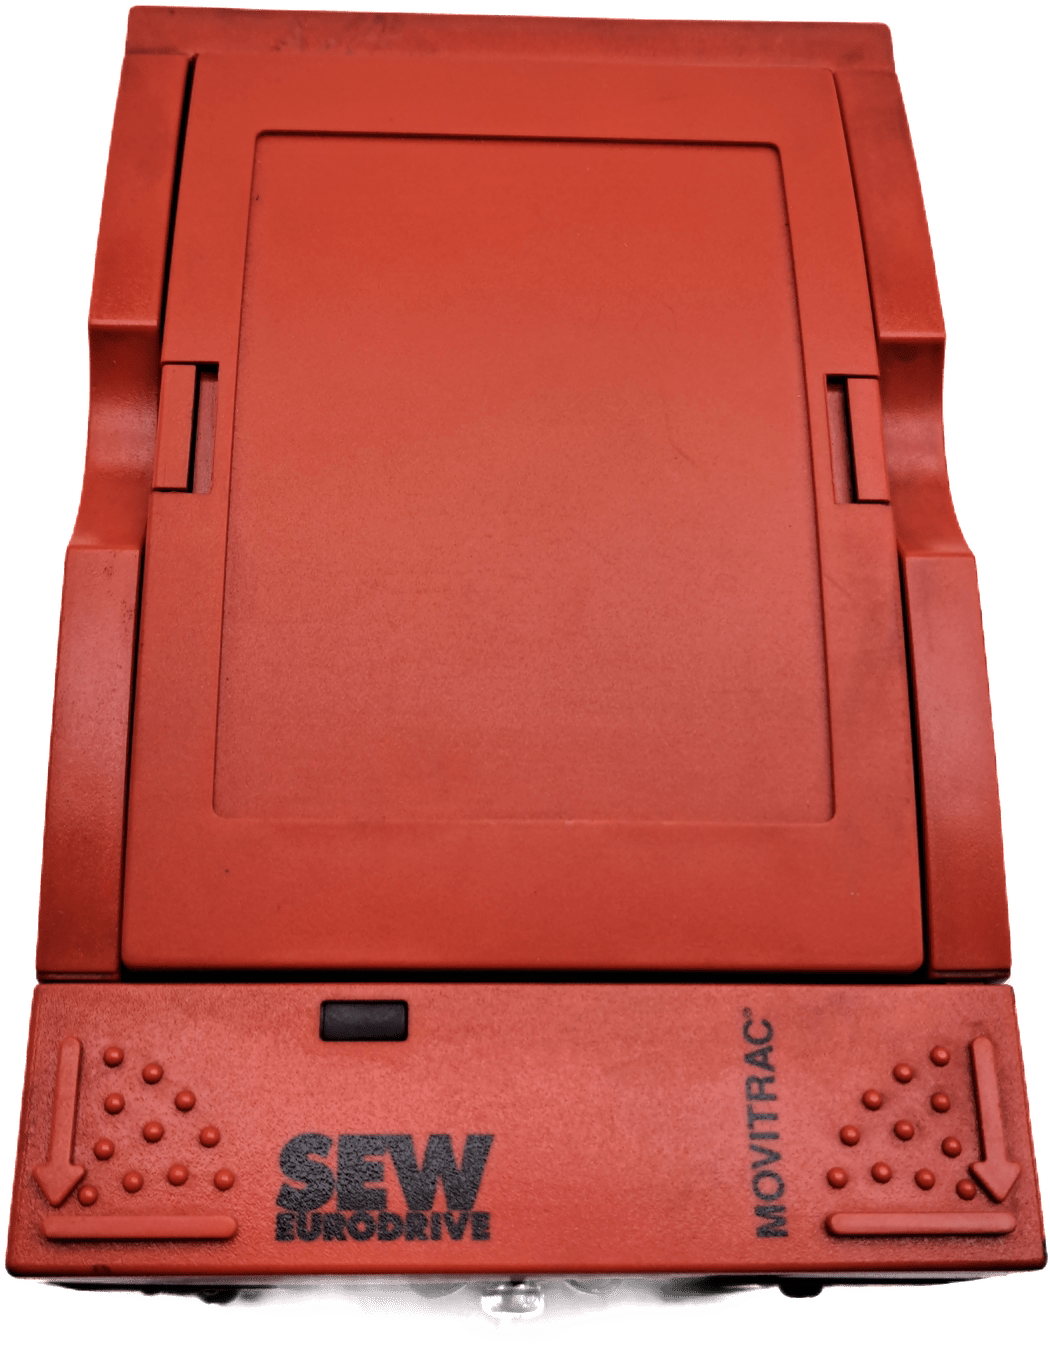 SEW Eurodrive MOVITRAC 31C007-503-4-00 - #product_category# | Klenk Maschinenhandel